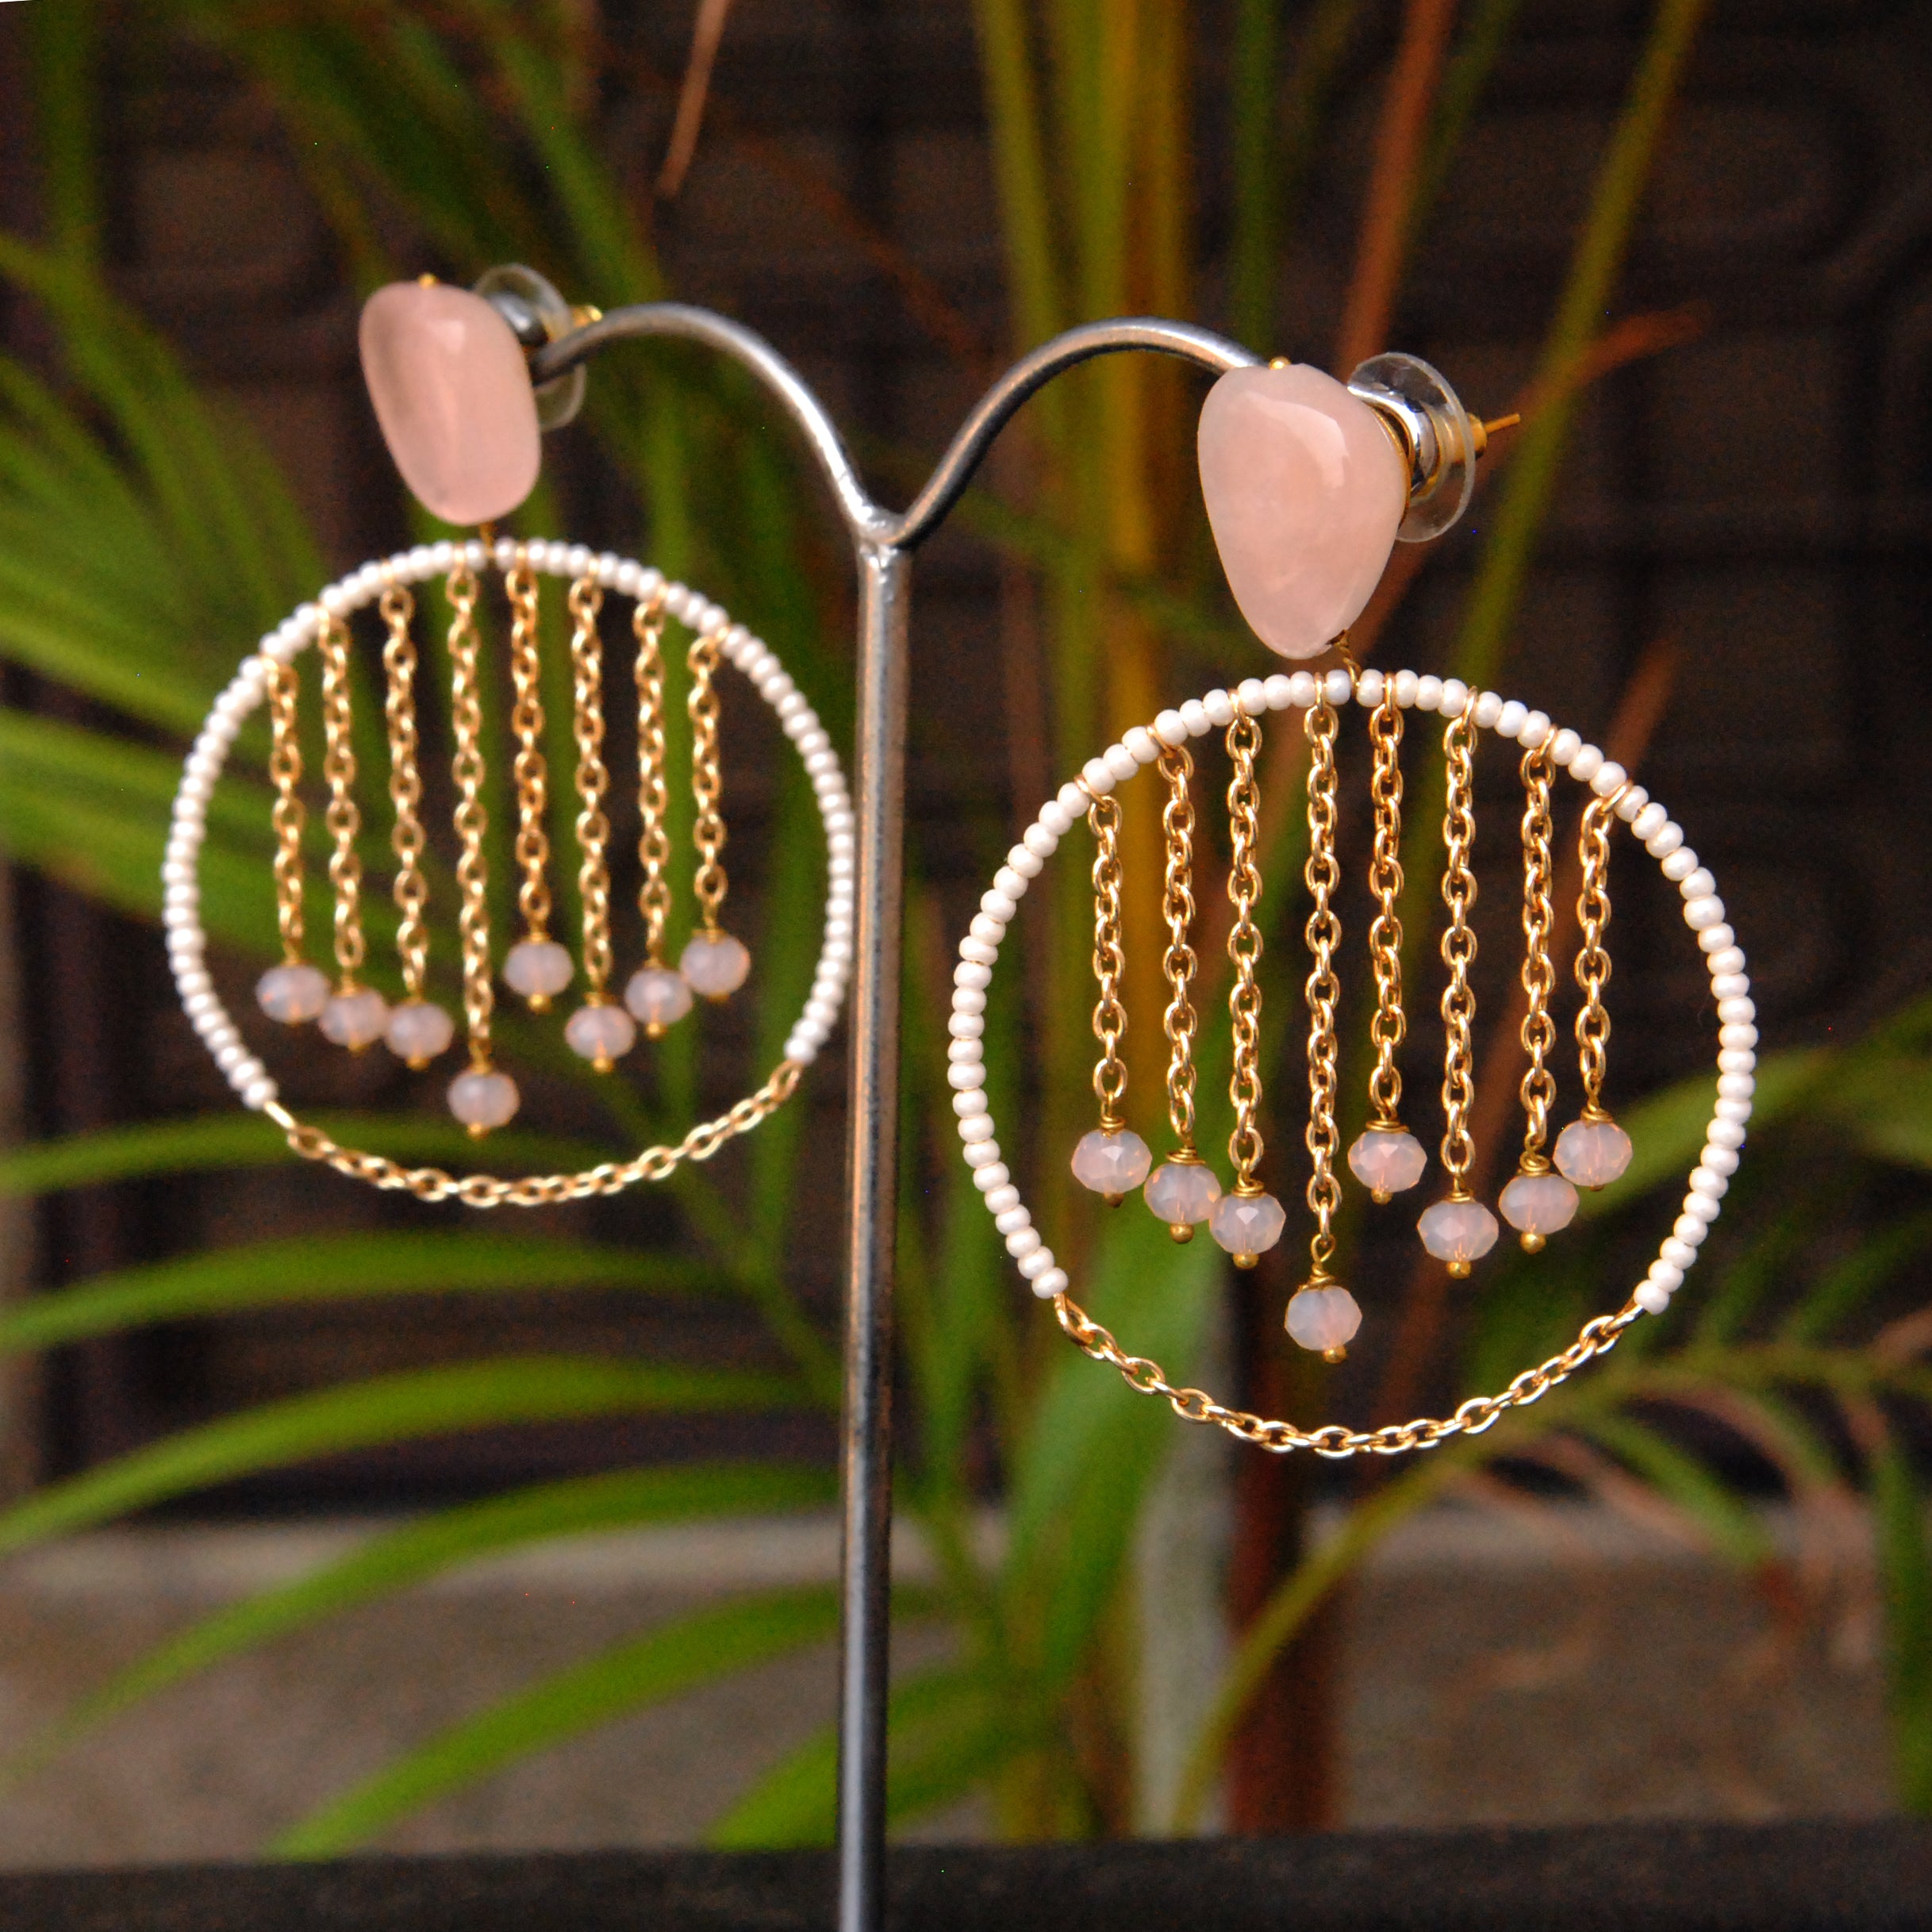 Top more than 121 semi precious stone earrings